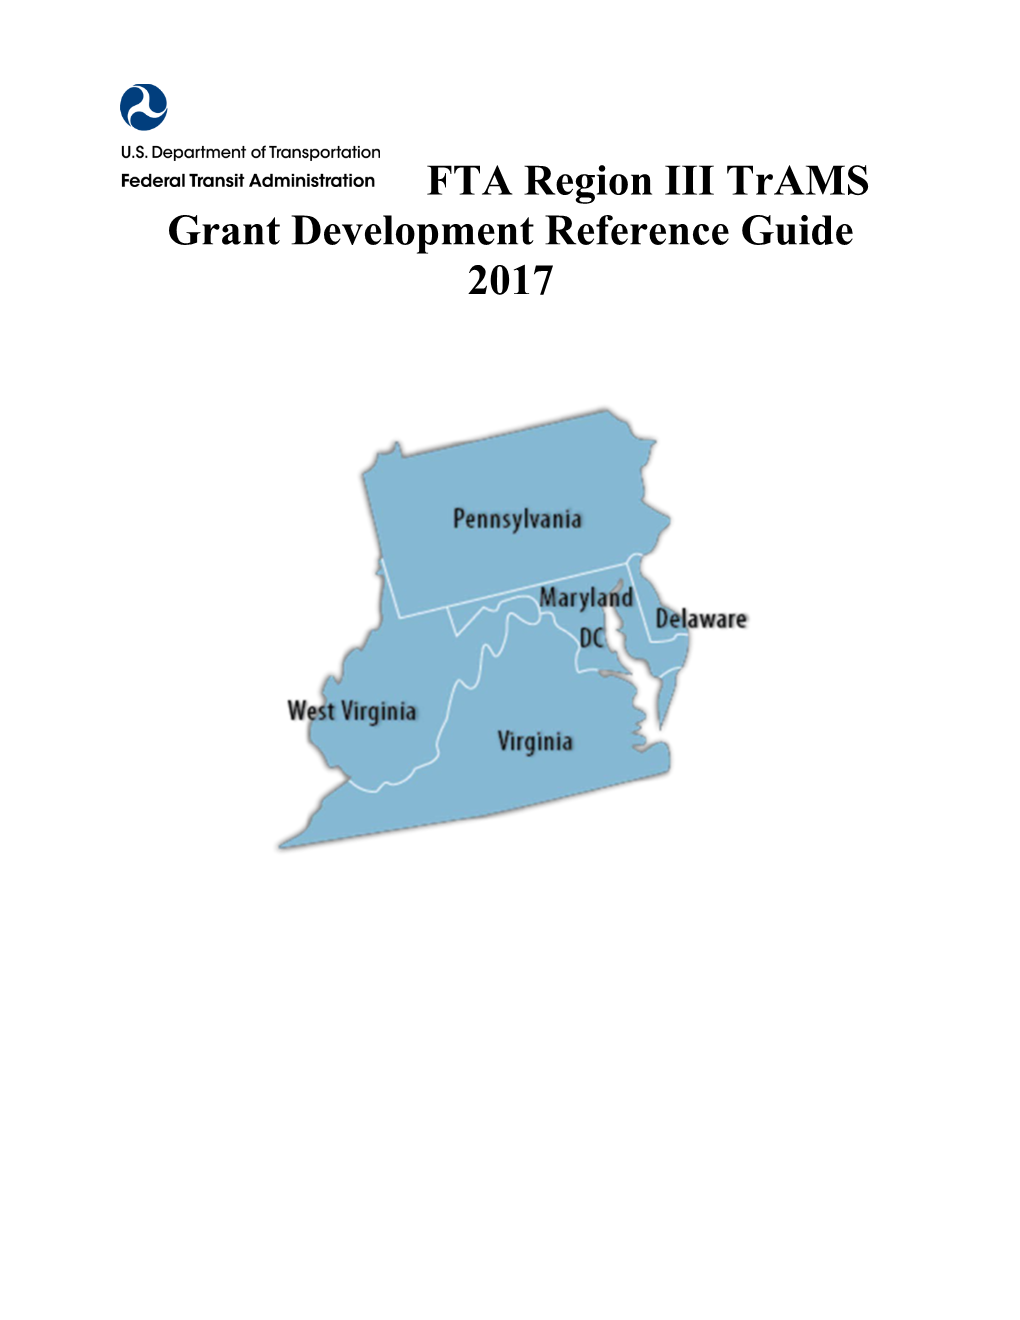 FTA Region 3 TRAMS Grant Development Refernece Guide June 2017